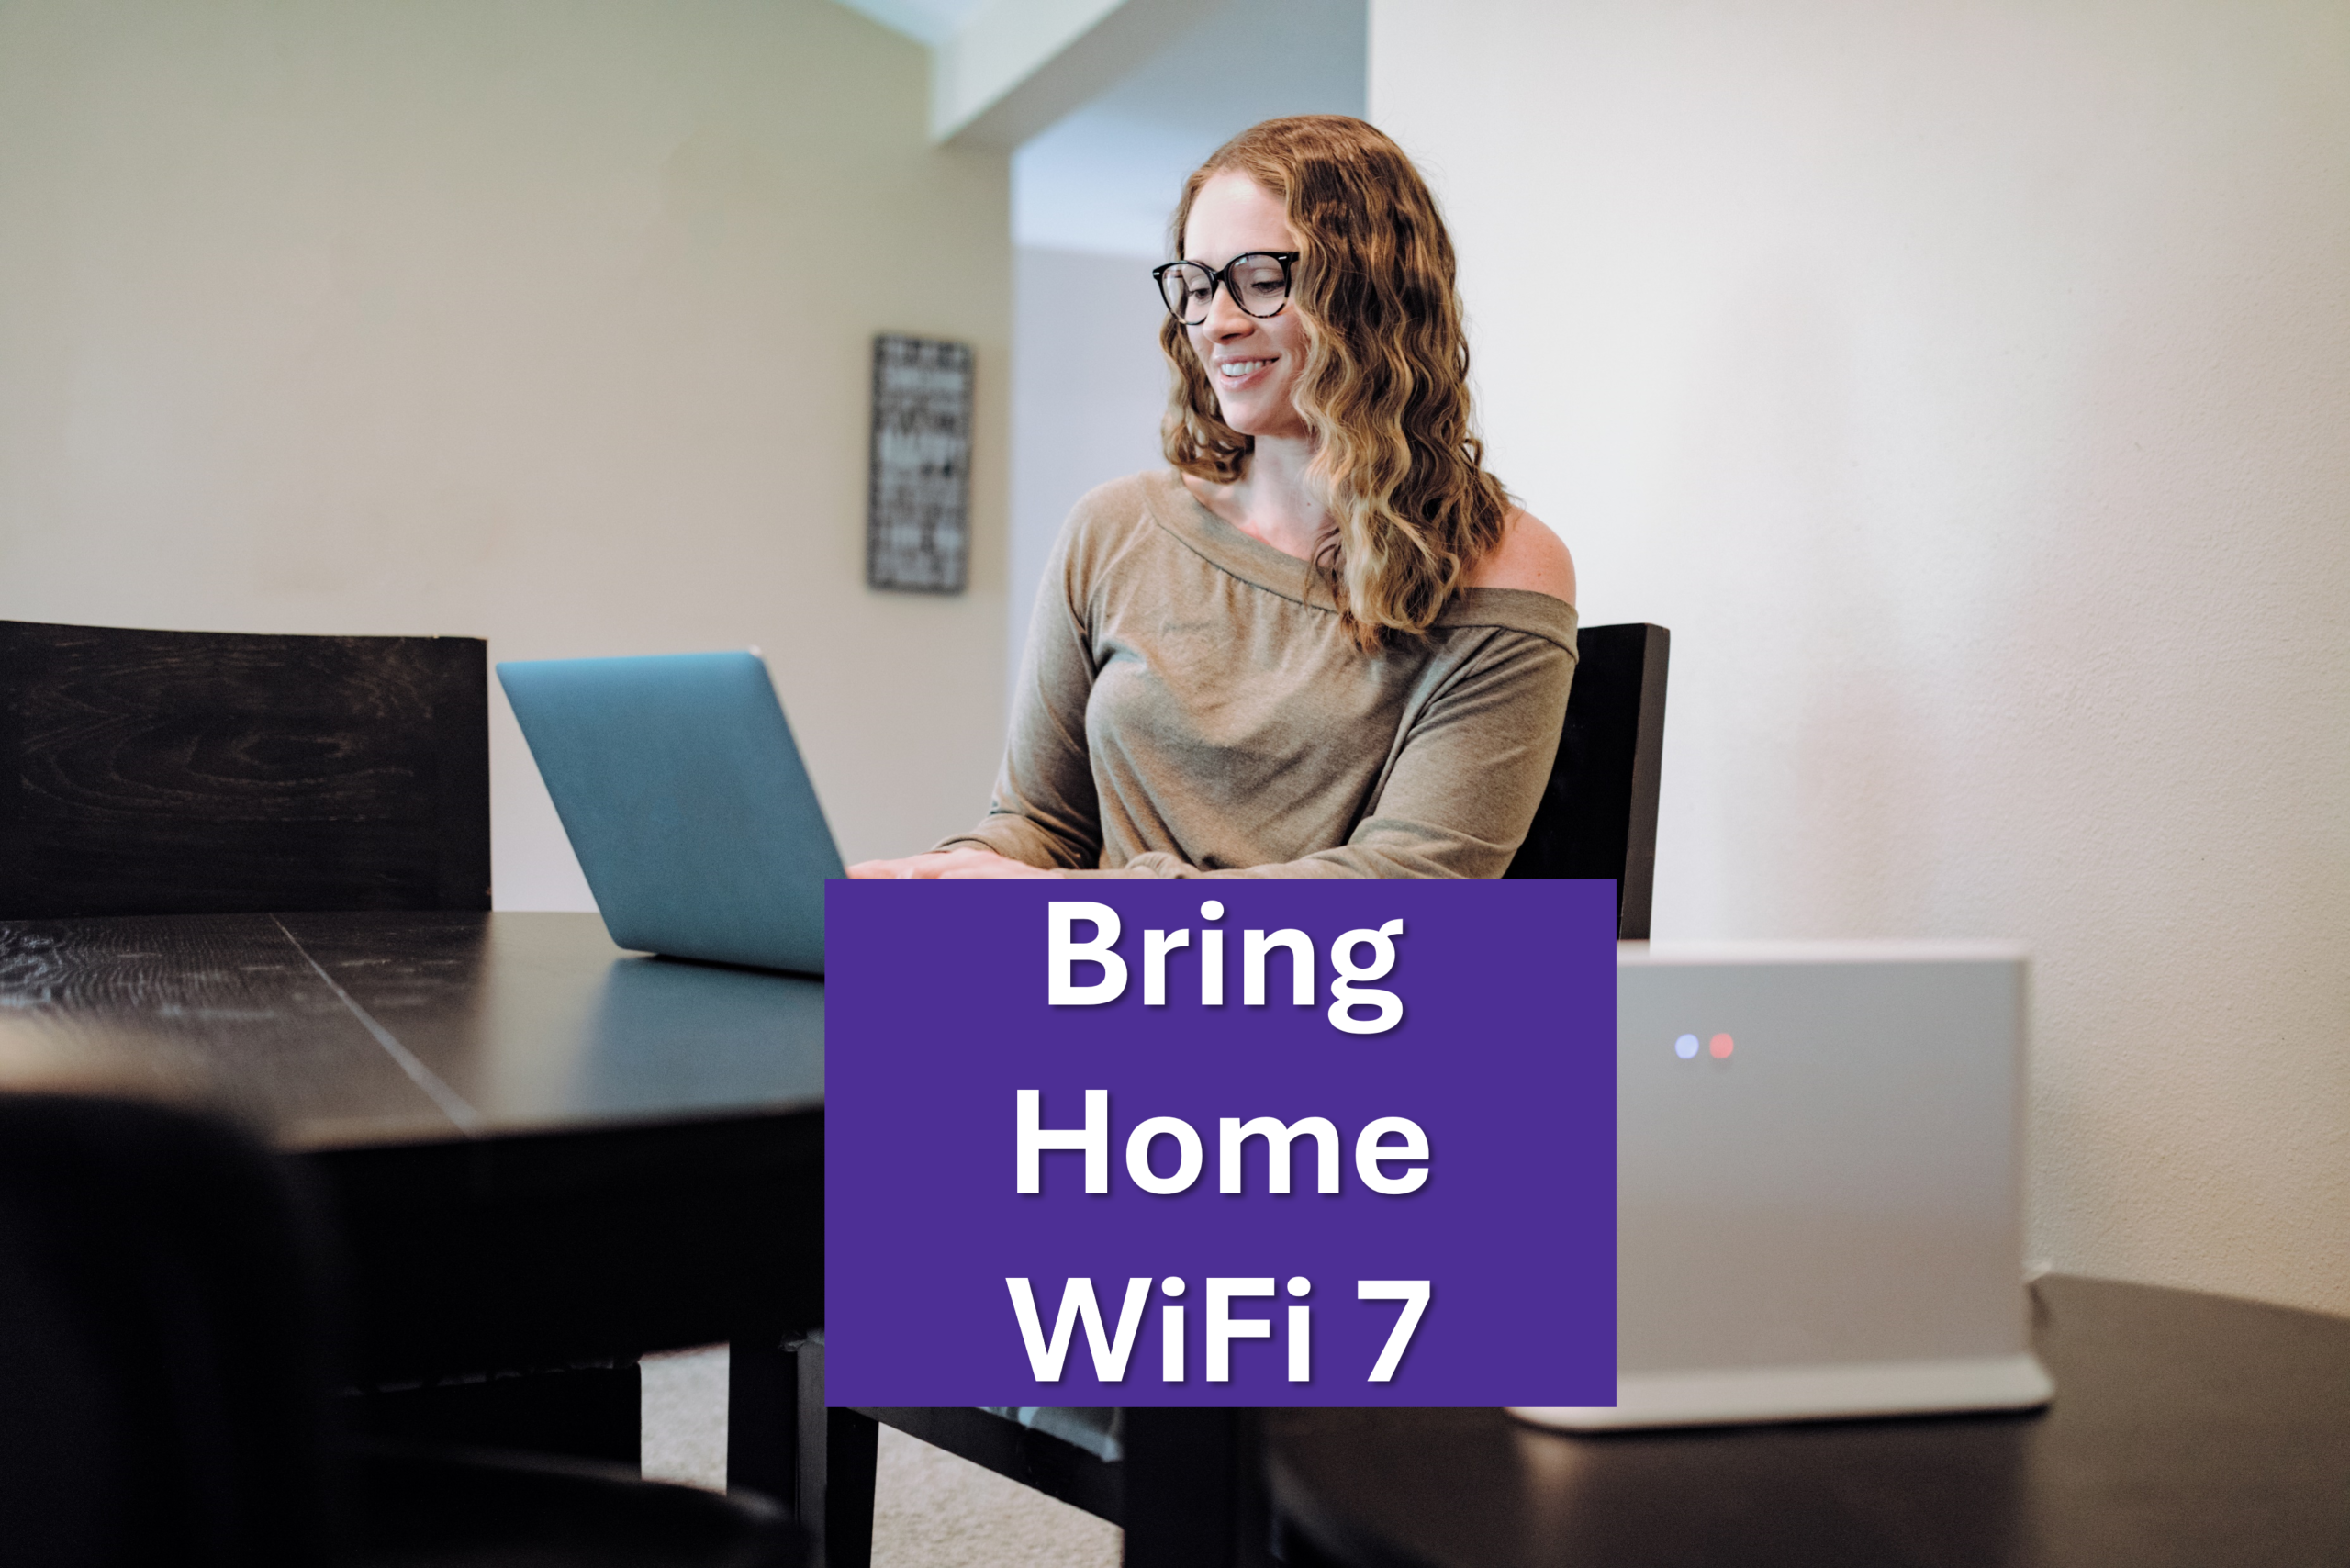 A woman enjoys WiFi 7 speed on a laptop